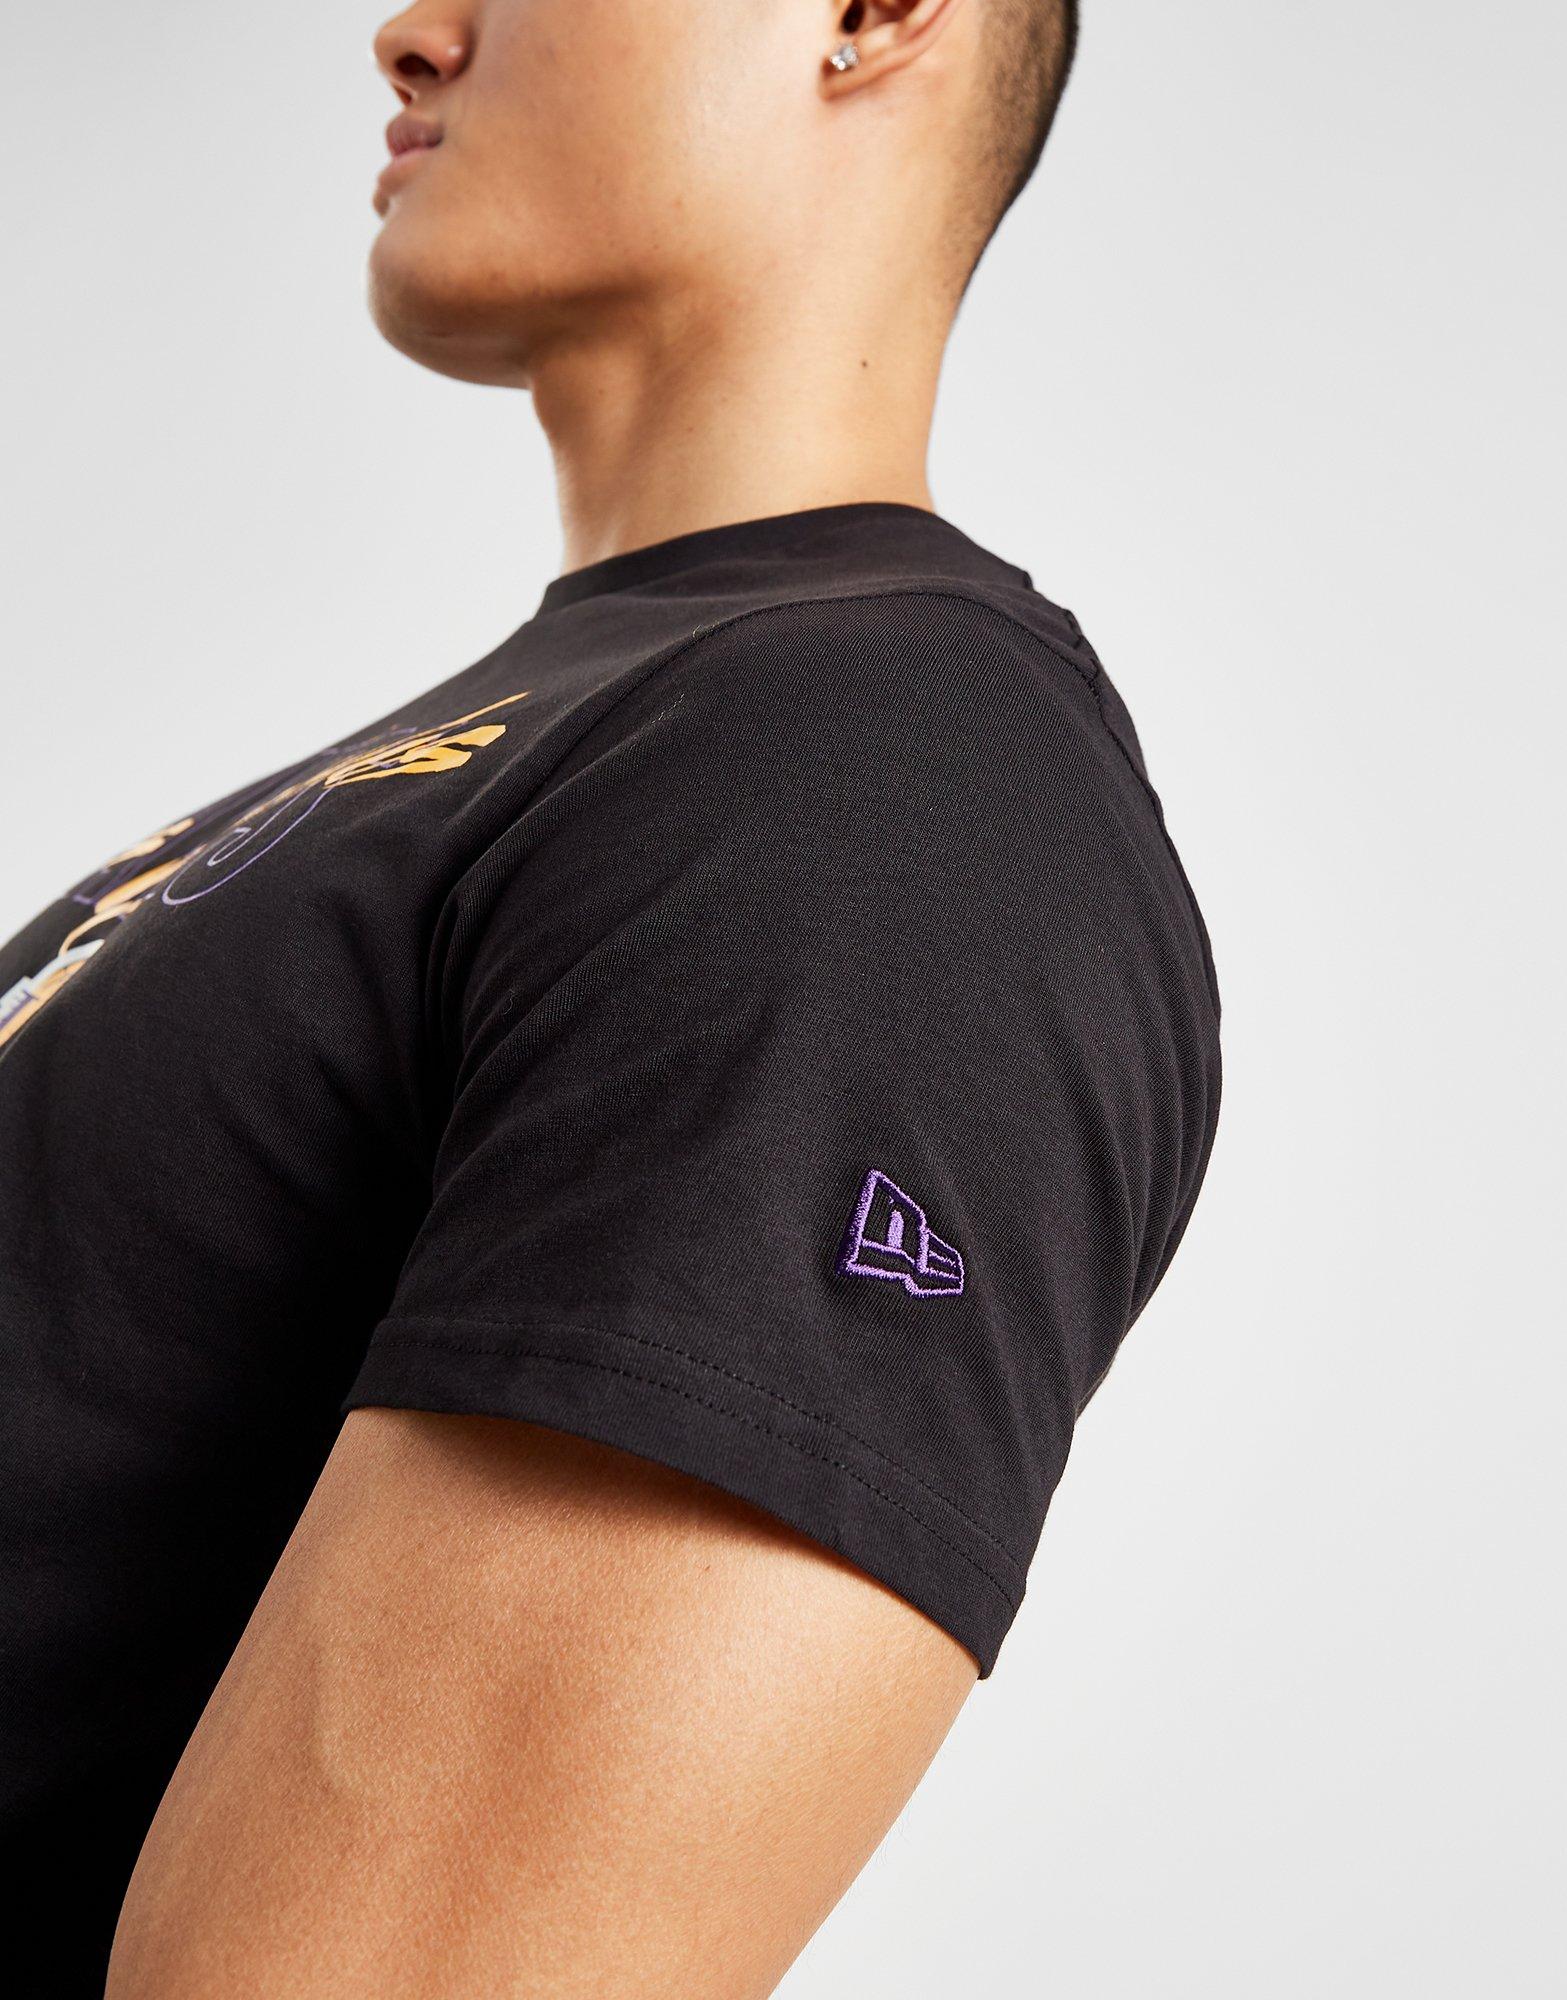 New era NBA Big Logo Los Angeles Lakers Short Sleeve T-Shirt Black